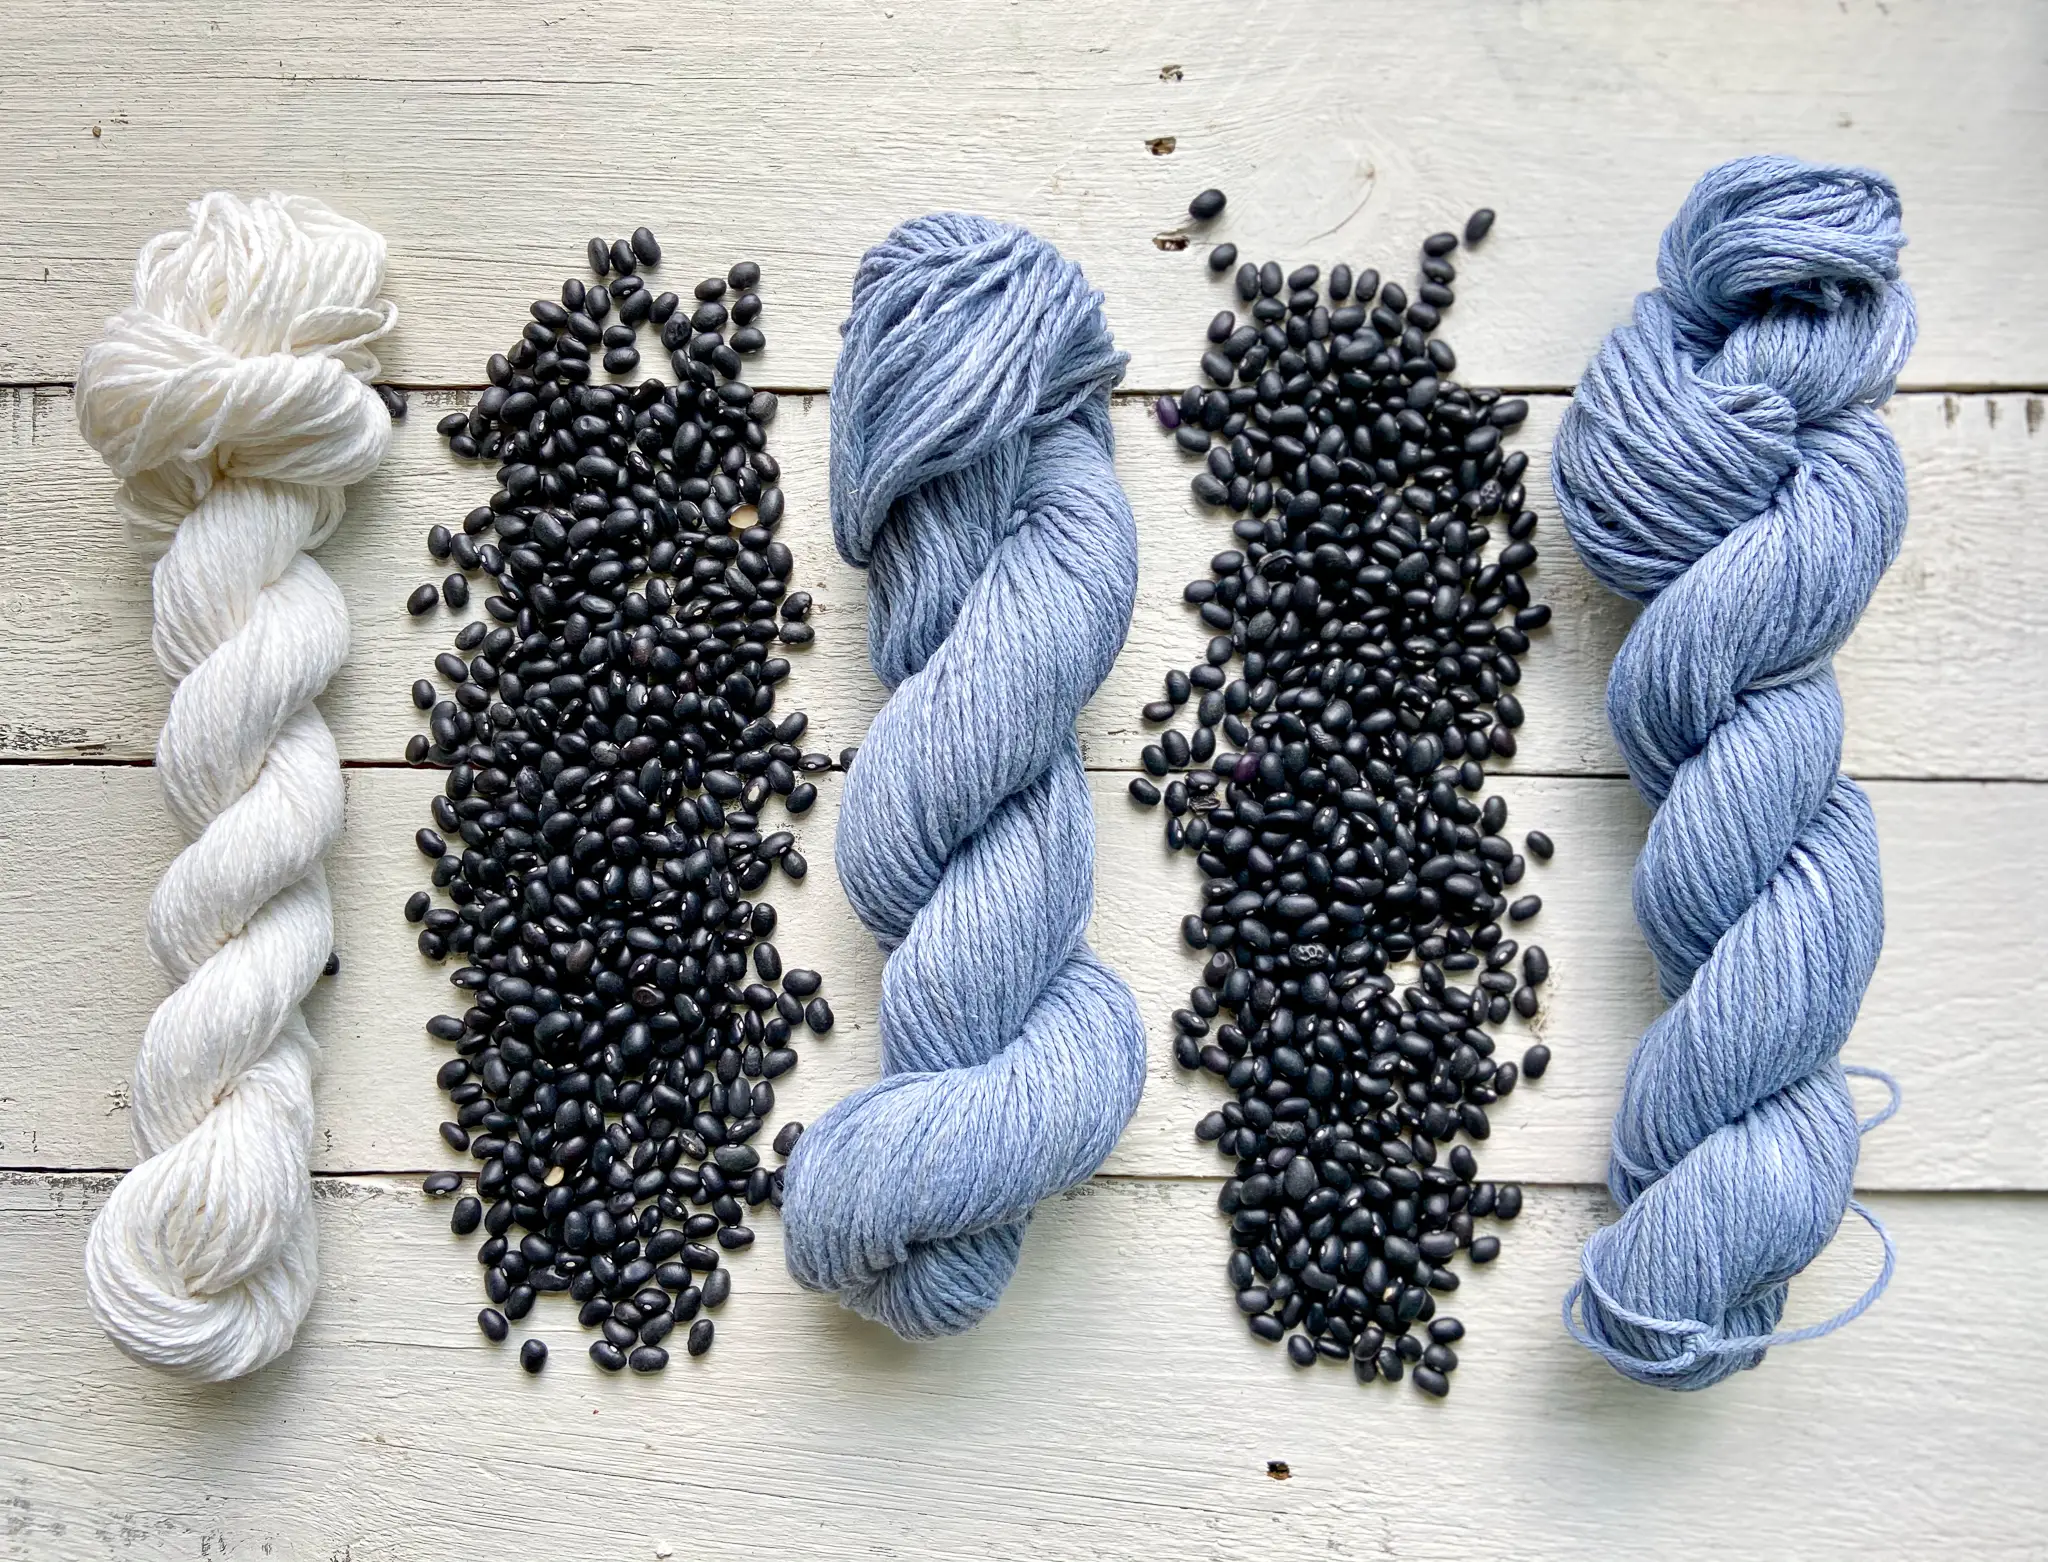 How To Make Dye Blue Jeans Black Online